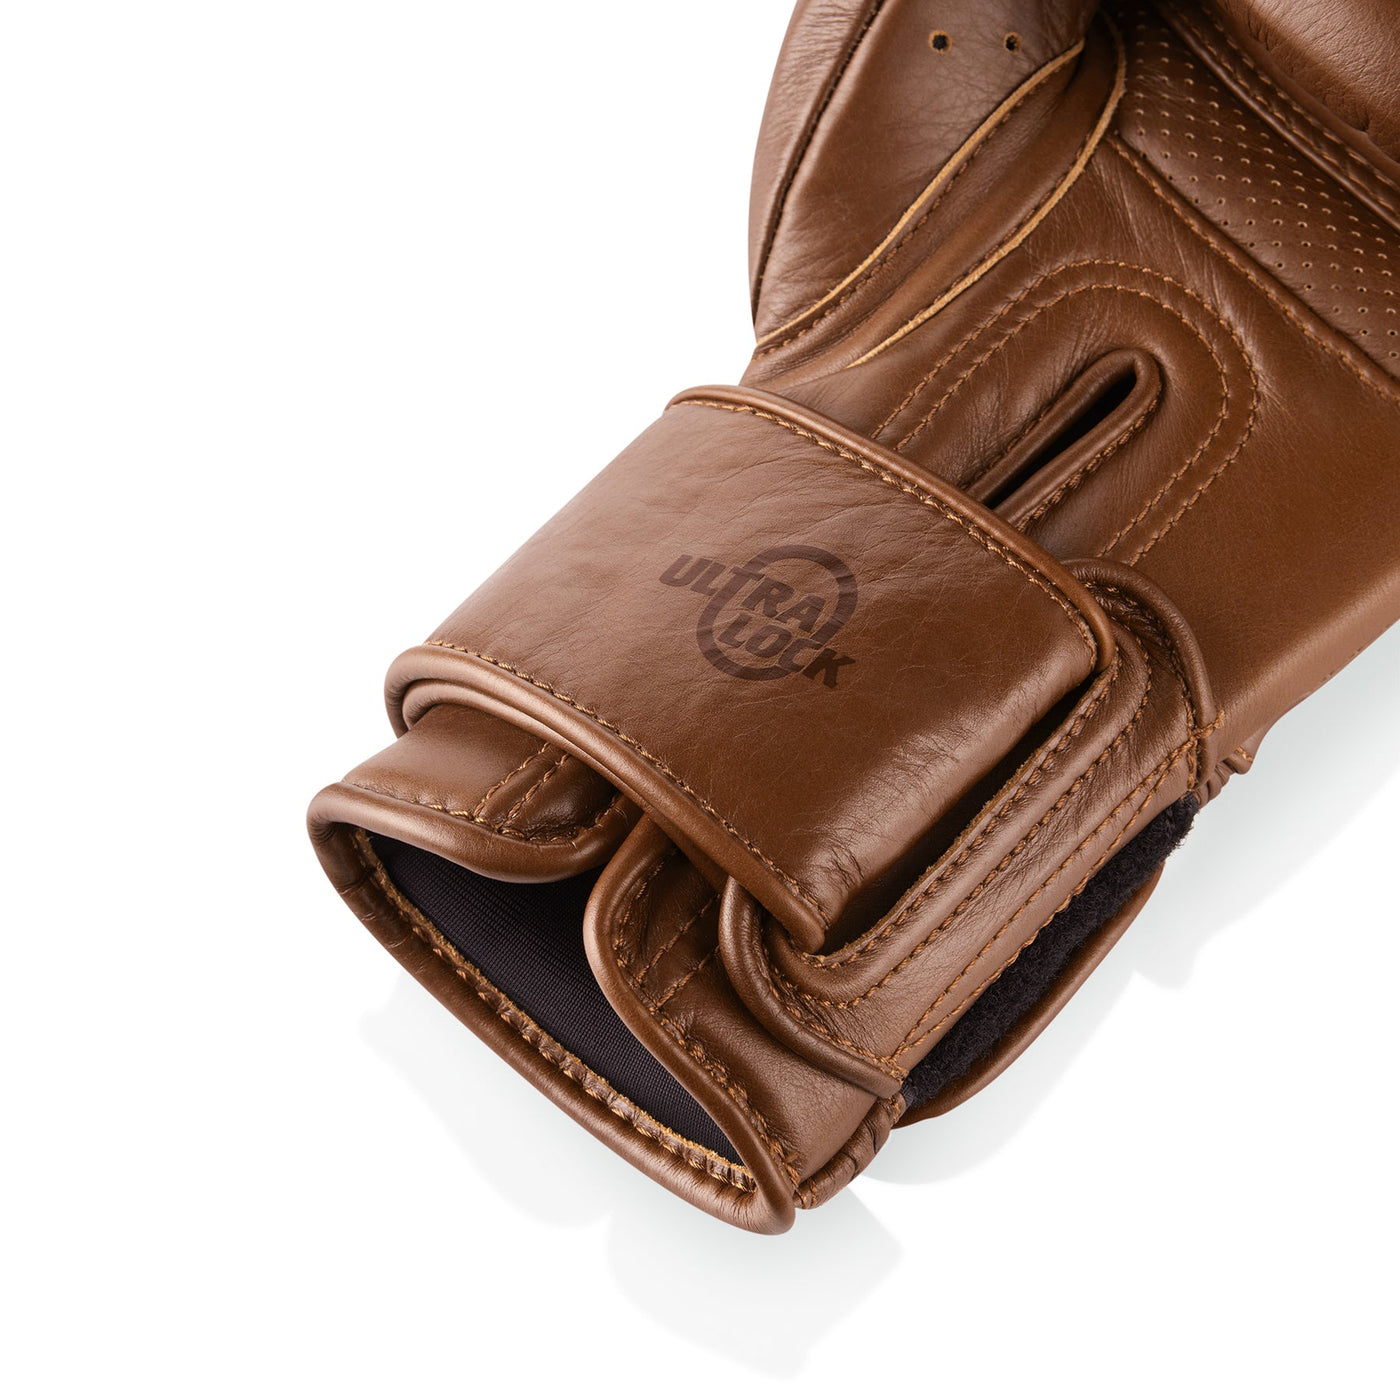 Phenom  SB-150 Super Bag Gloves